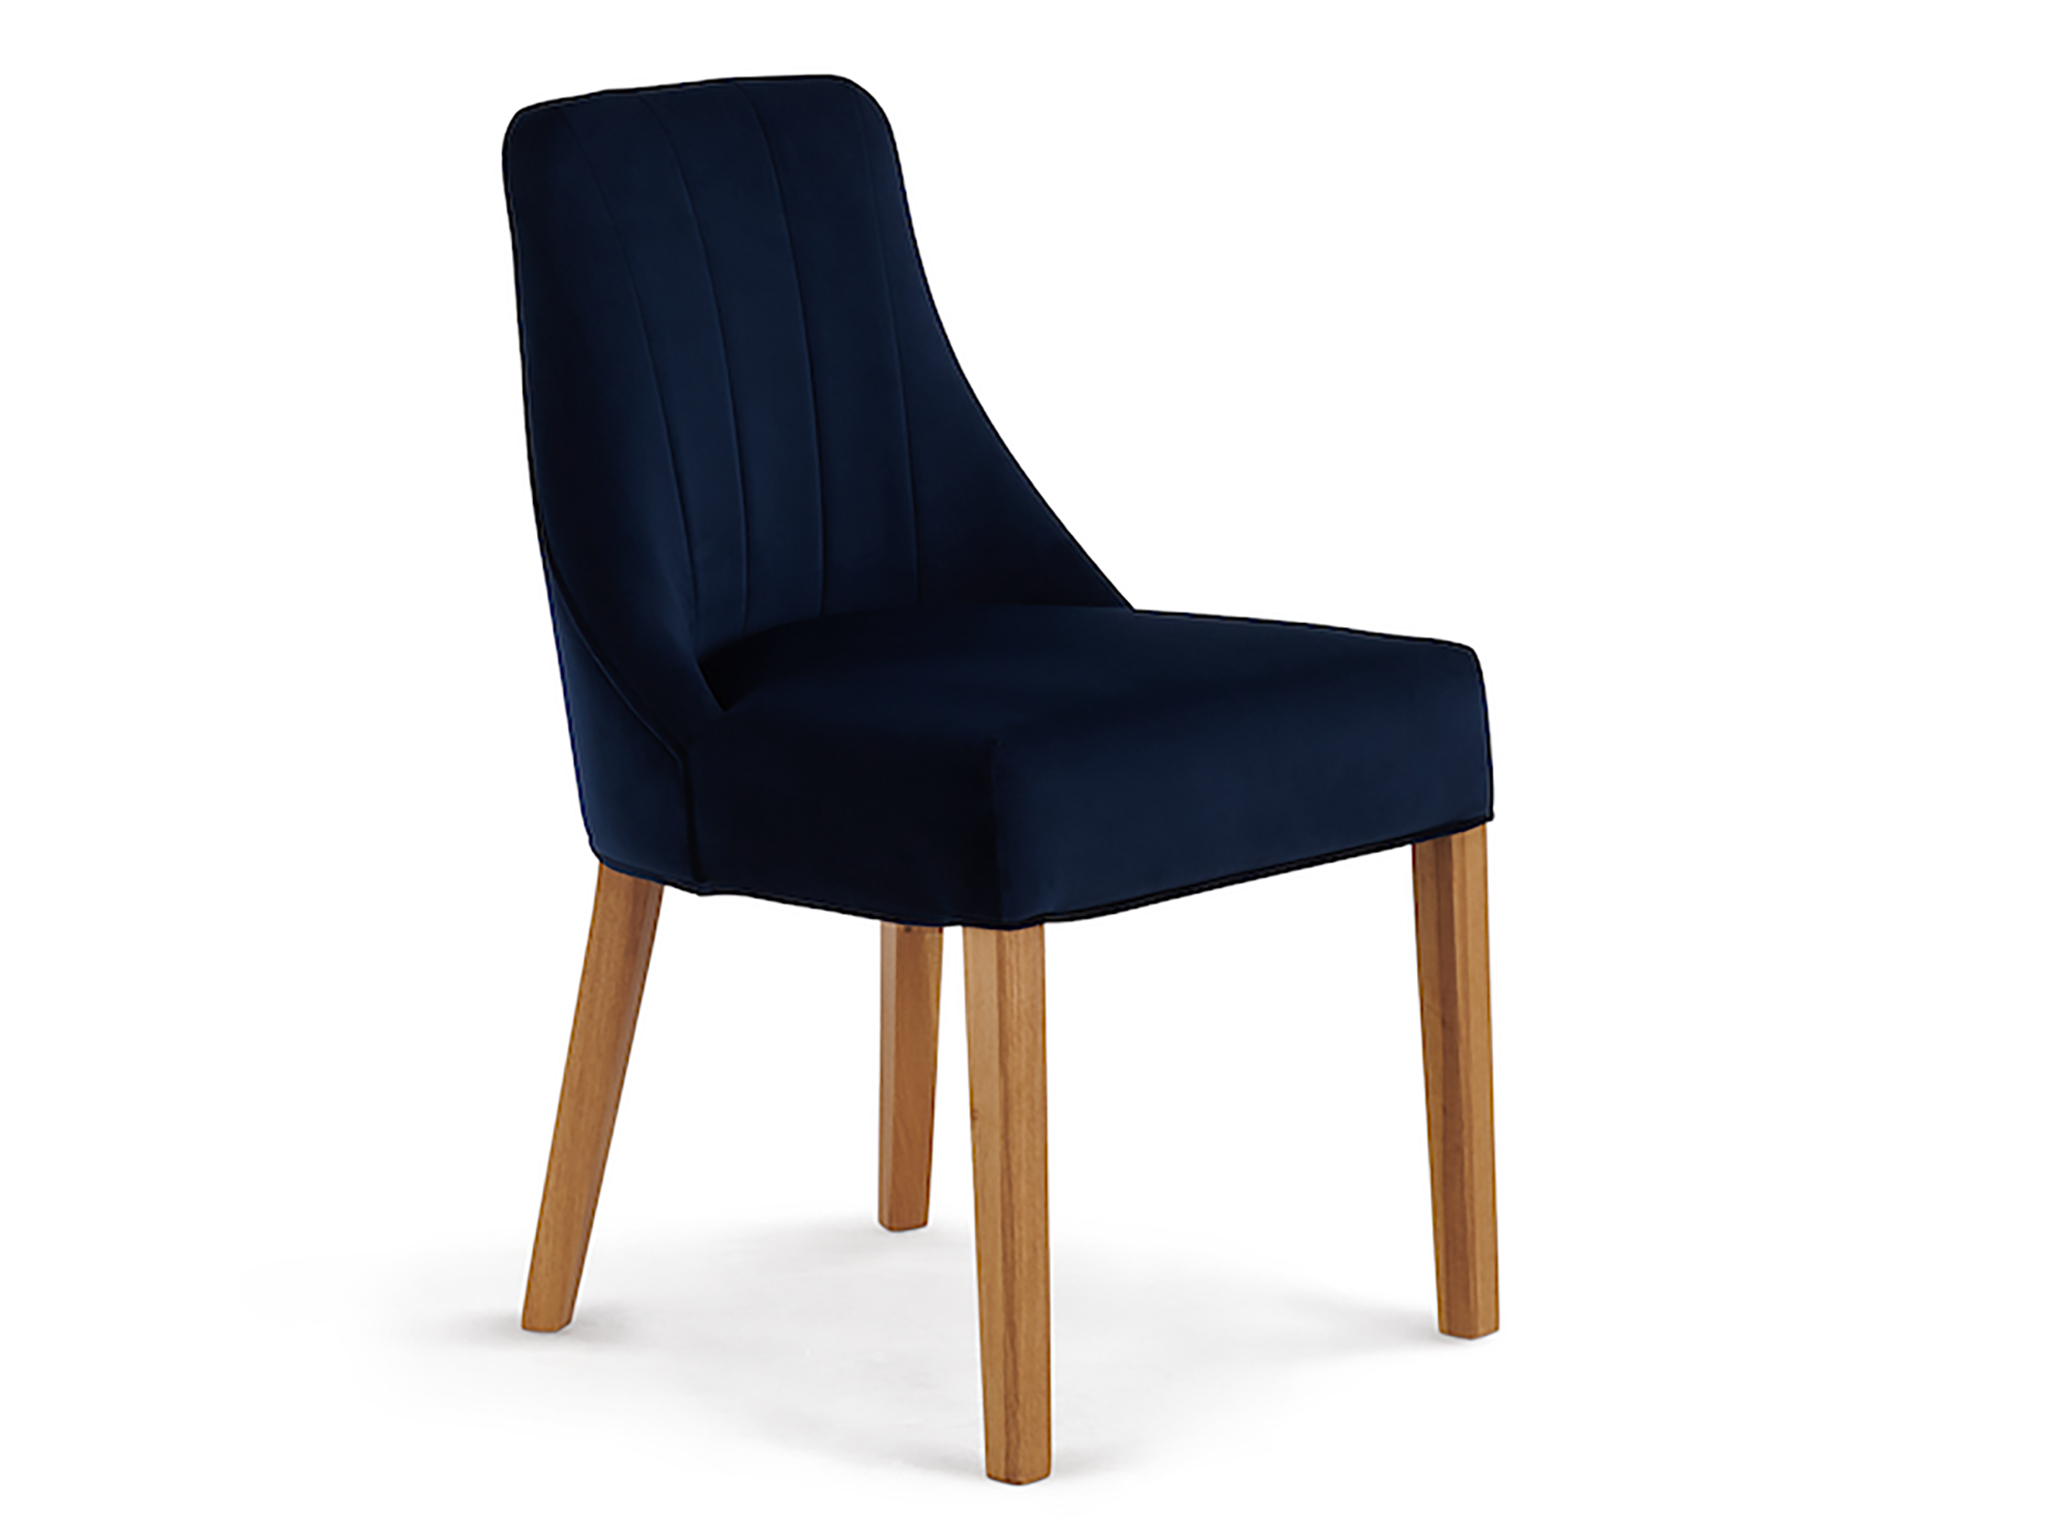 Oak Furnitureland Marlene upholstered chair, midnight blue